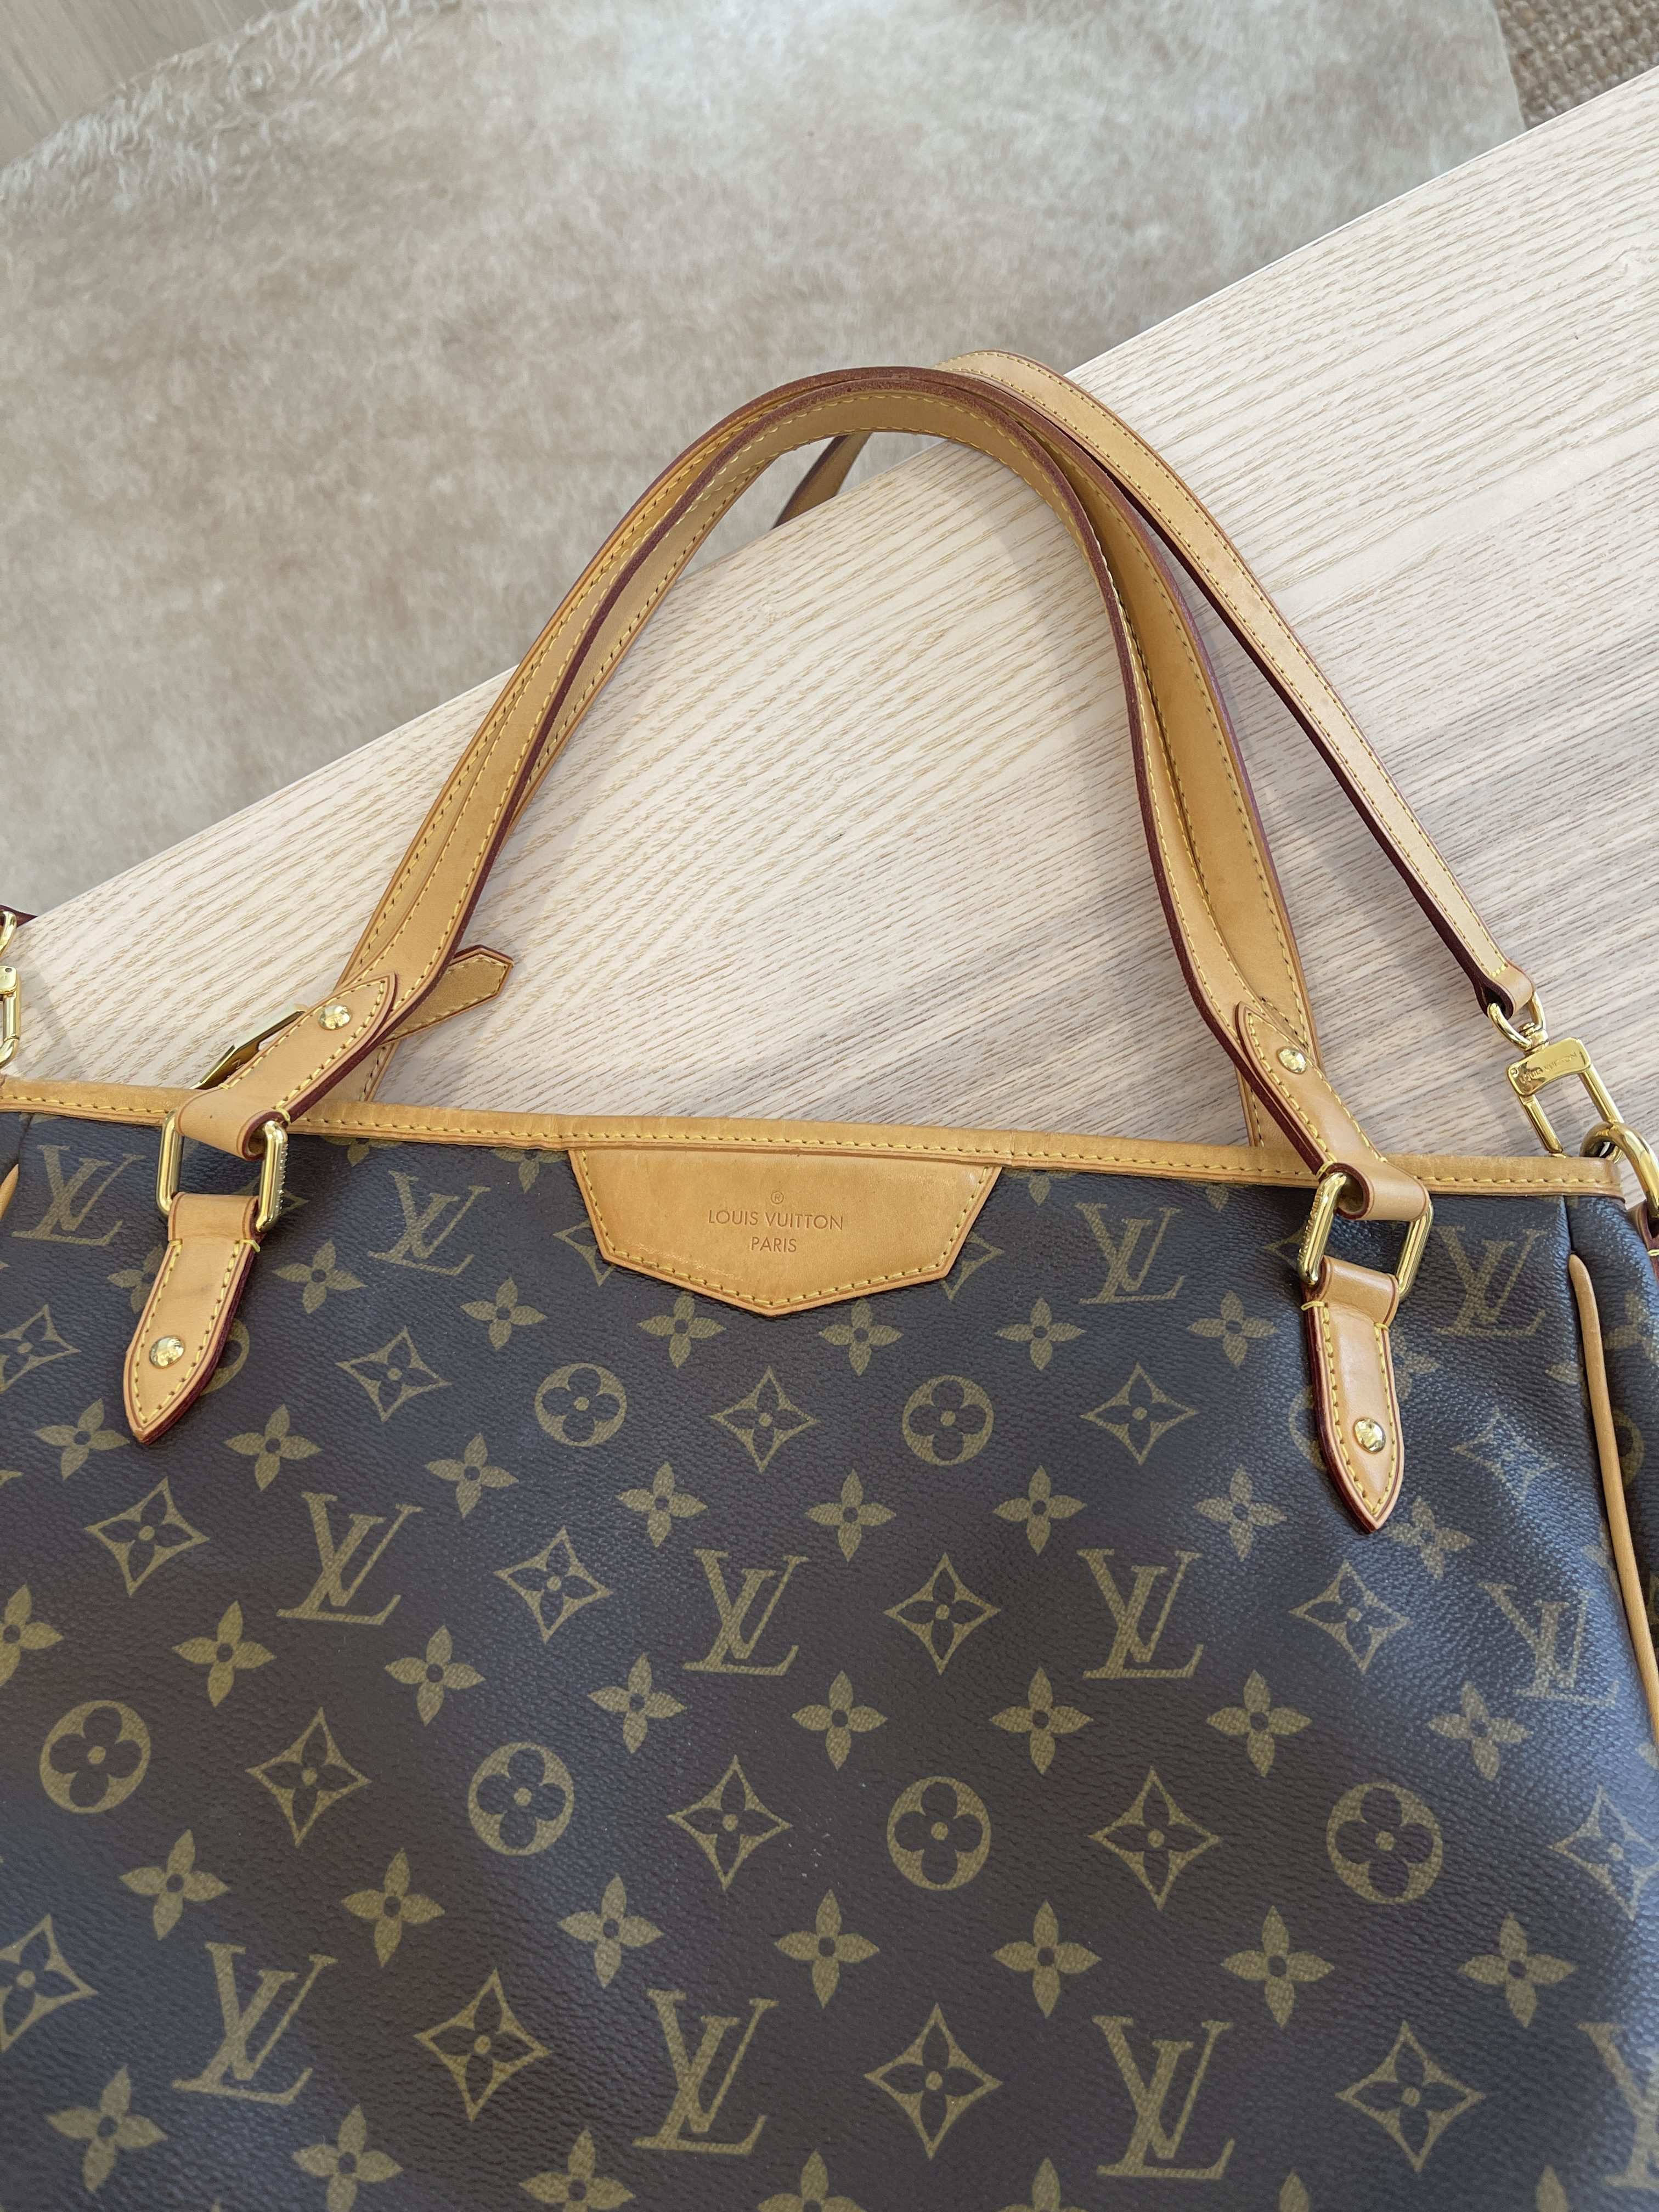 Estrela Louis Vuitton Bag - 2 For Sale on 1stDibs